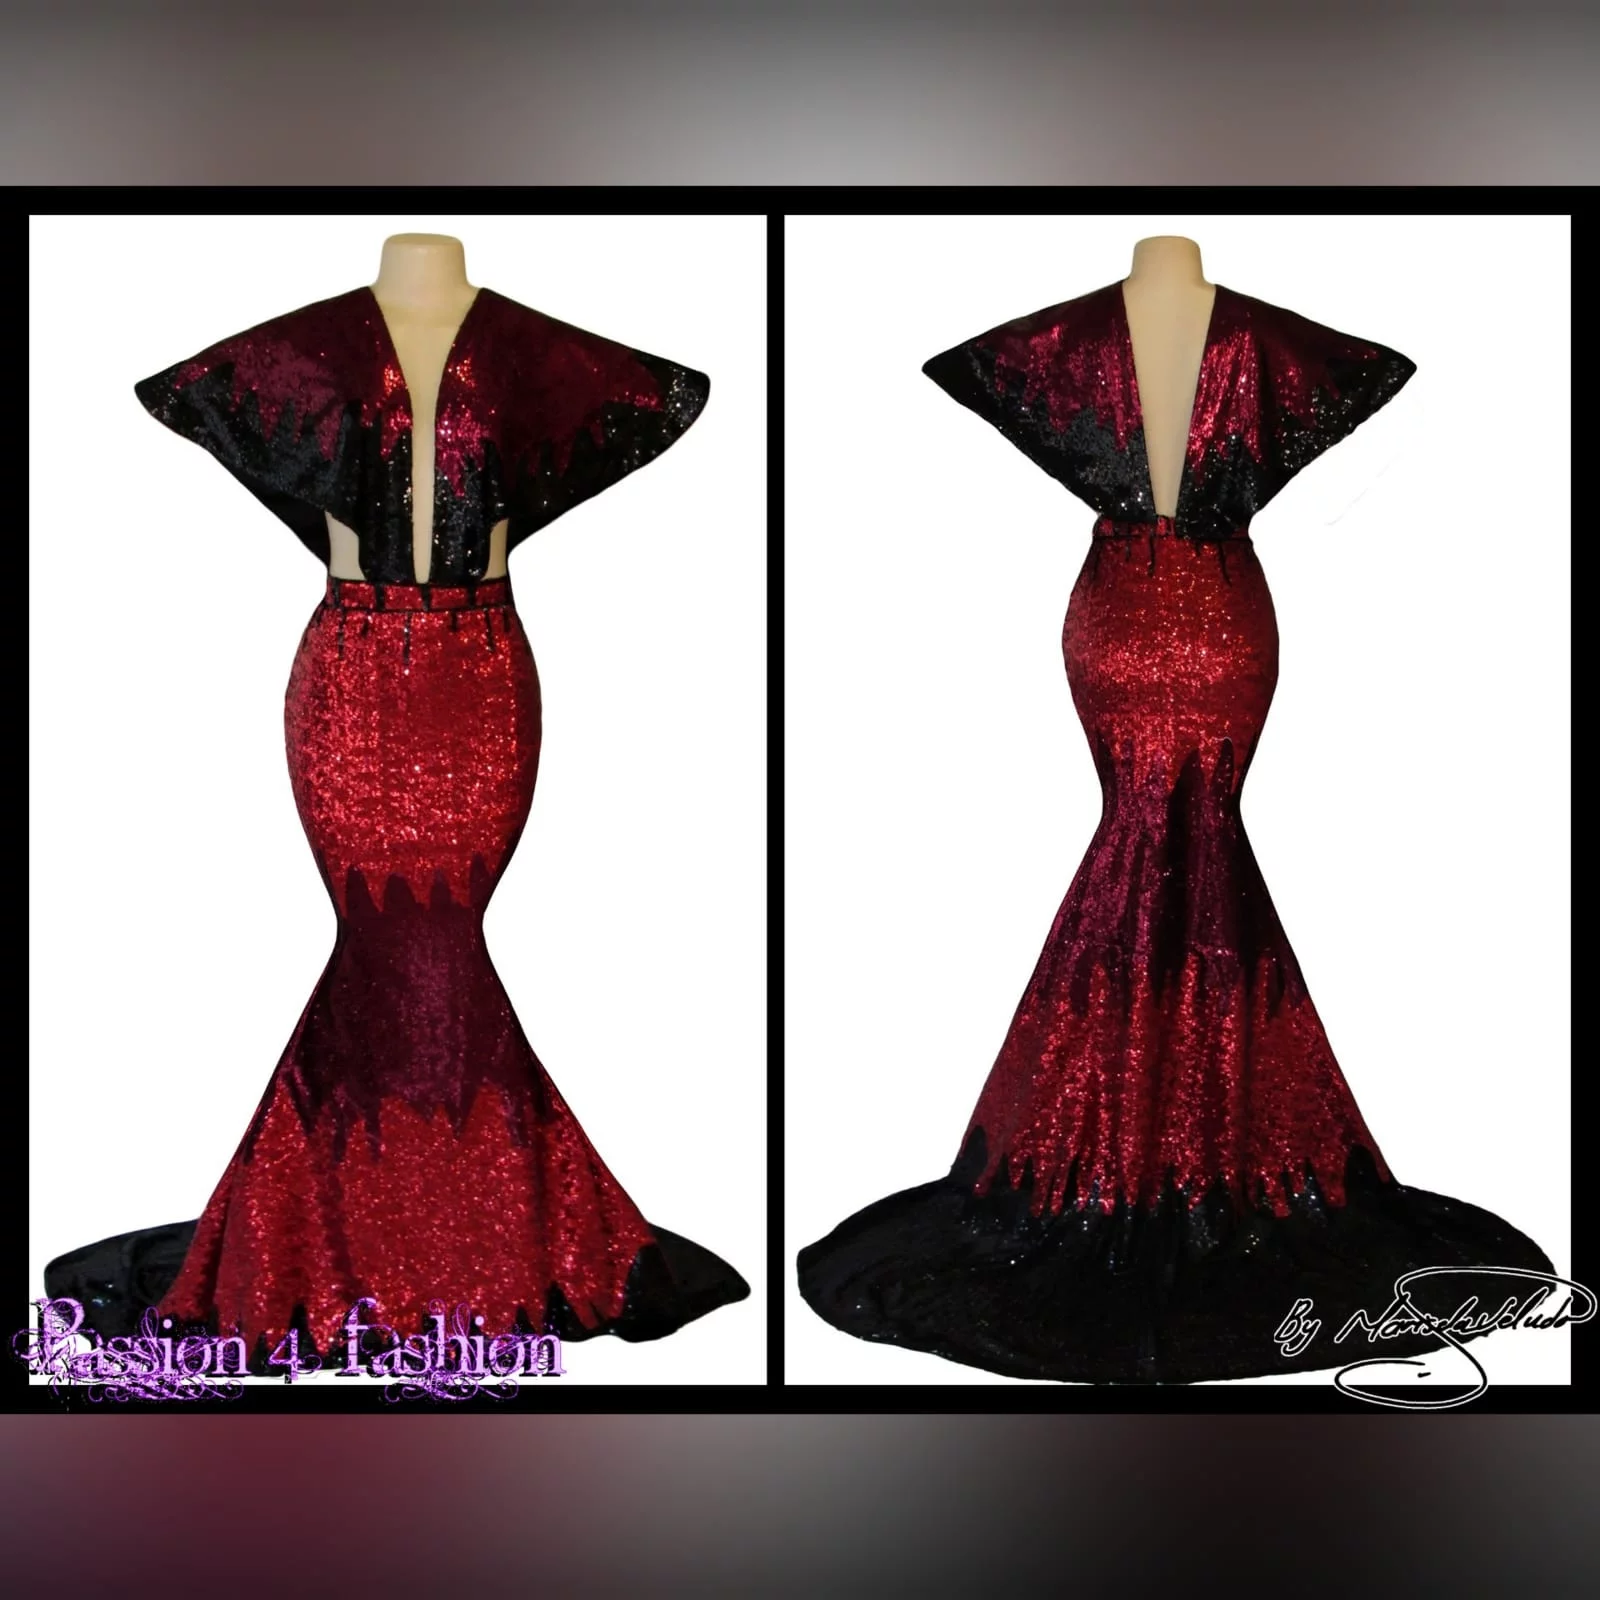 Maroon, burgundy and black sequins matric dance dress 4 maroon, burgundy and black fully sequined soft mermaid, plunging neckline matric dance dress